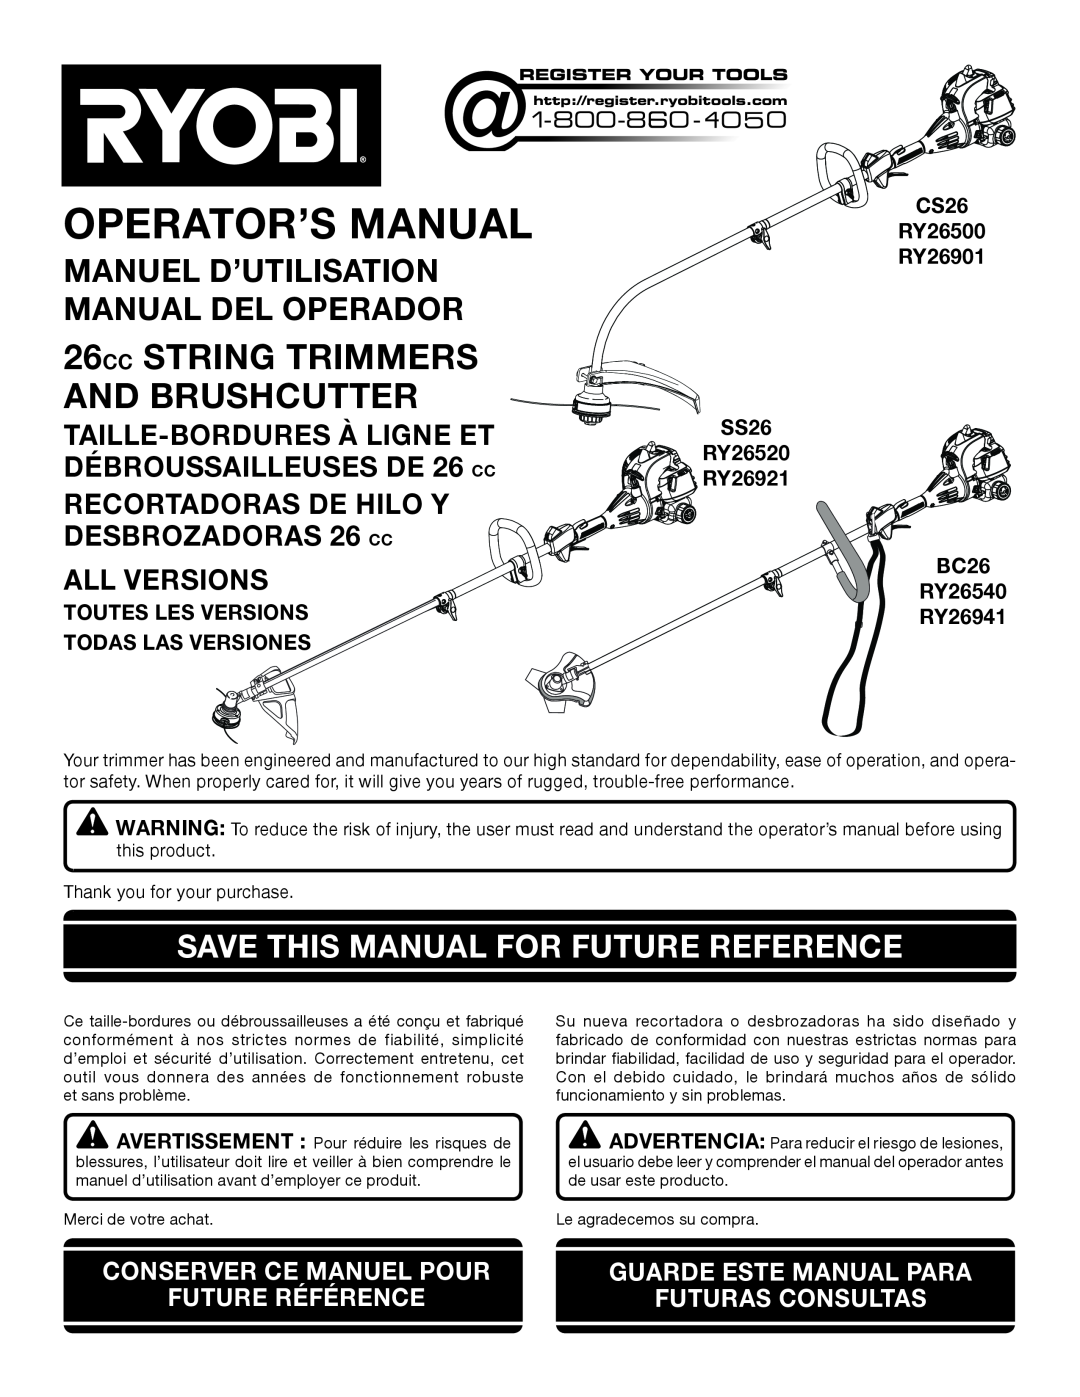 Ryobi CS26 manuel dutilisation 26cc String Trimmers and brushcutter, Manuel D’Utilisation Manual Del Operador, SS26, BC26 